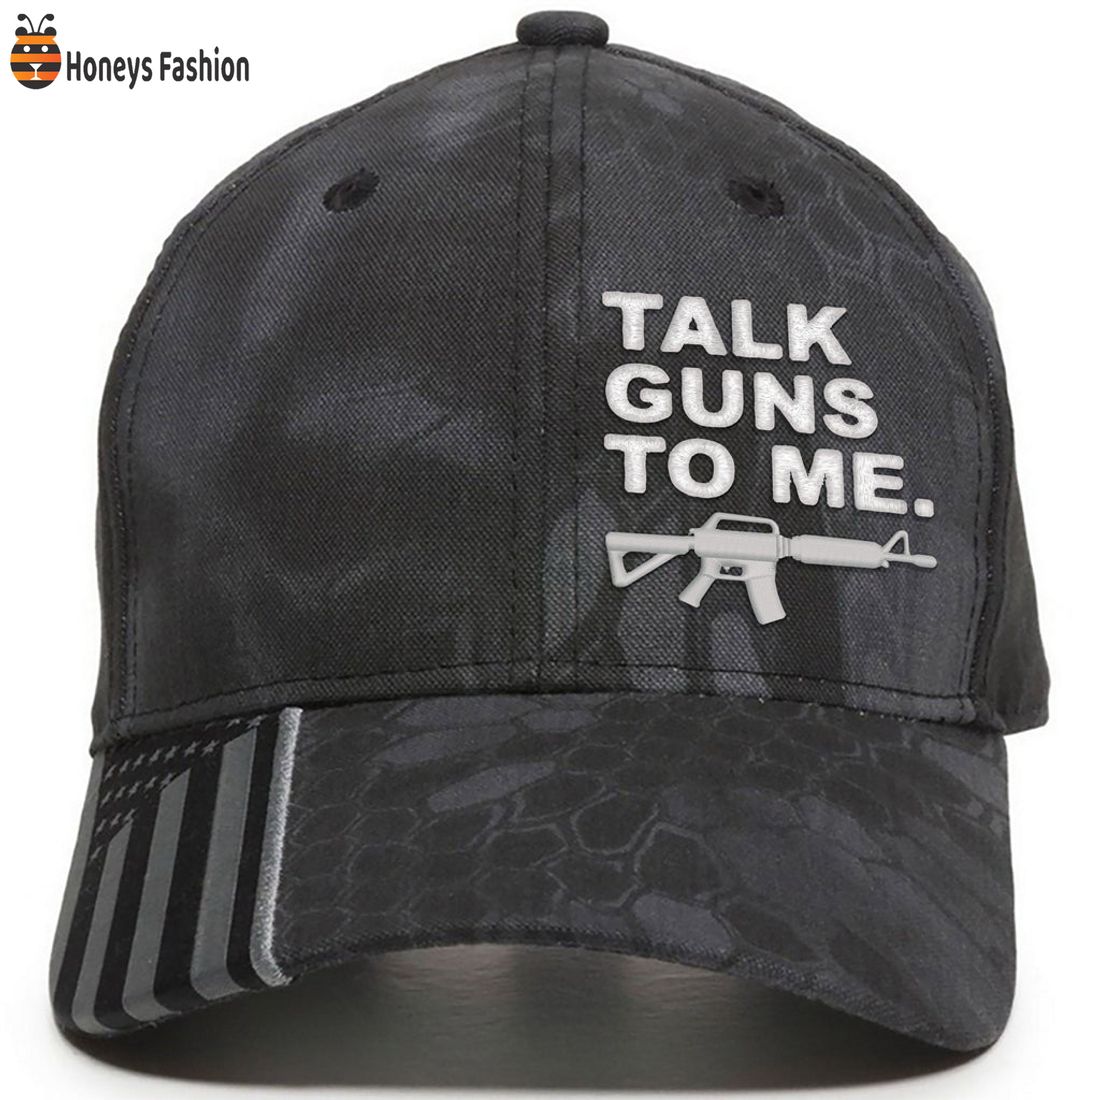 HOT Talk Guns To Me Classic Cap